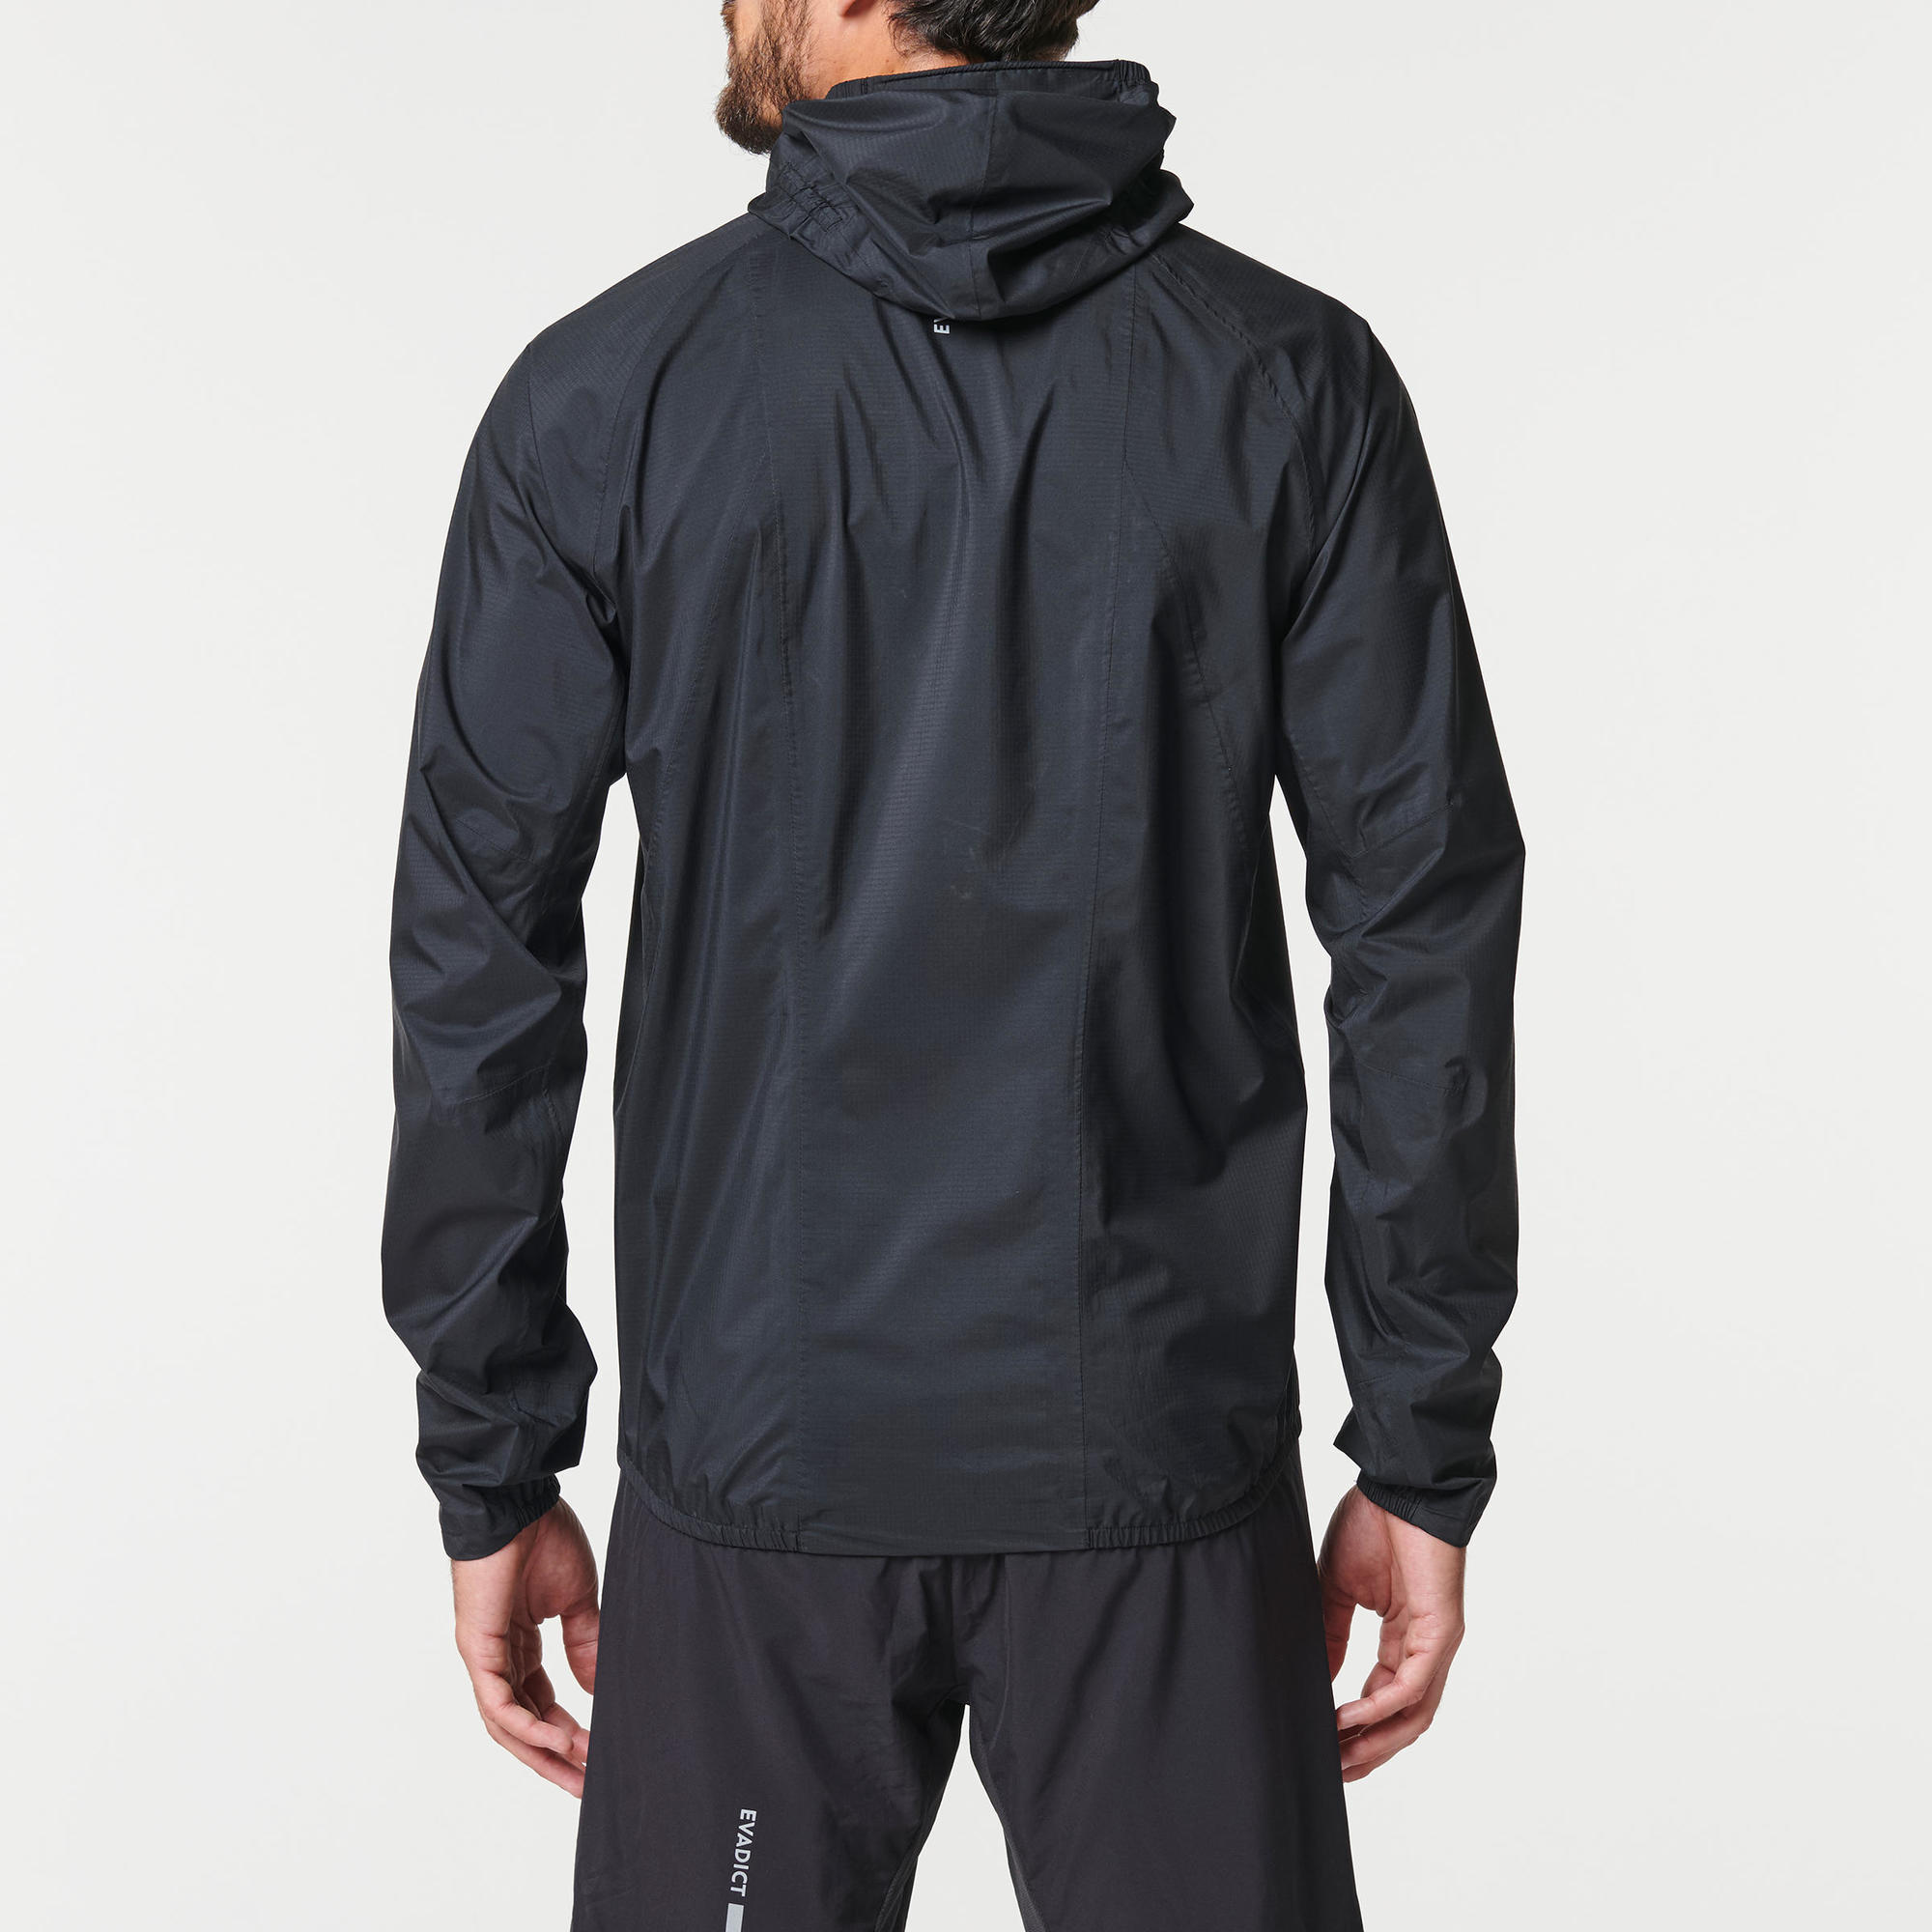 waterproof jacket recommendations